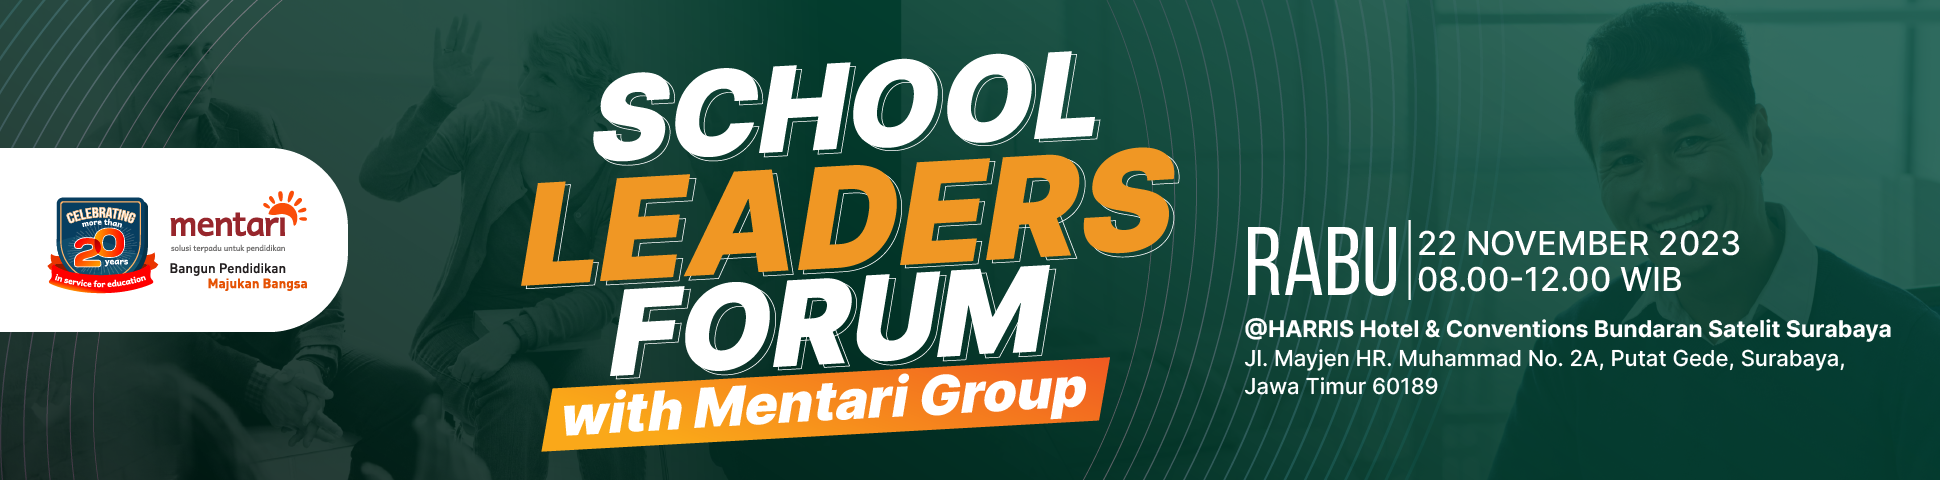 School Leaders Forum with Mentari Group 2023 - Surabaya